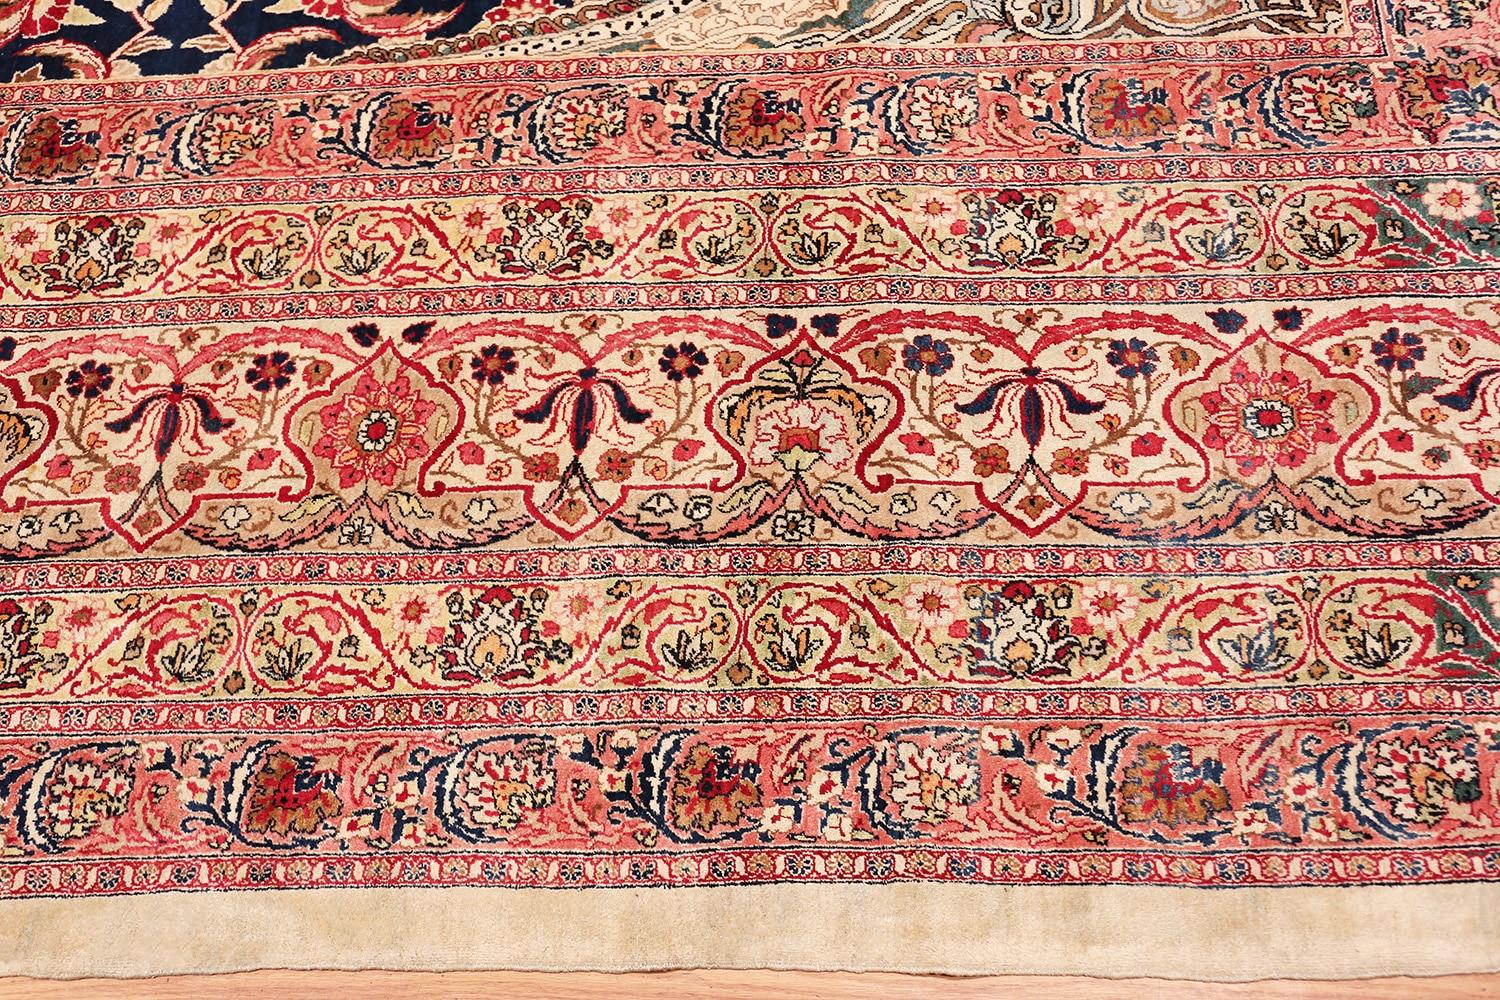 19th Century Oversized Antique Persian Kerman Rug. Size: 16' x 22'6